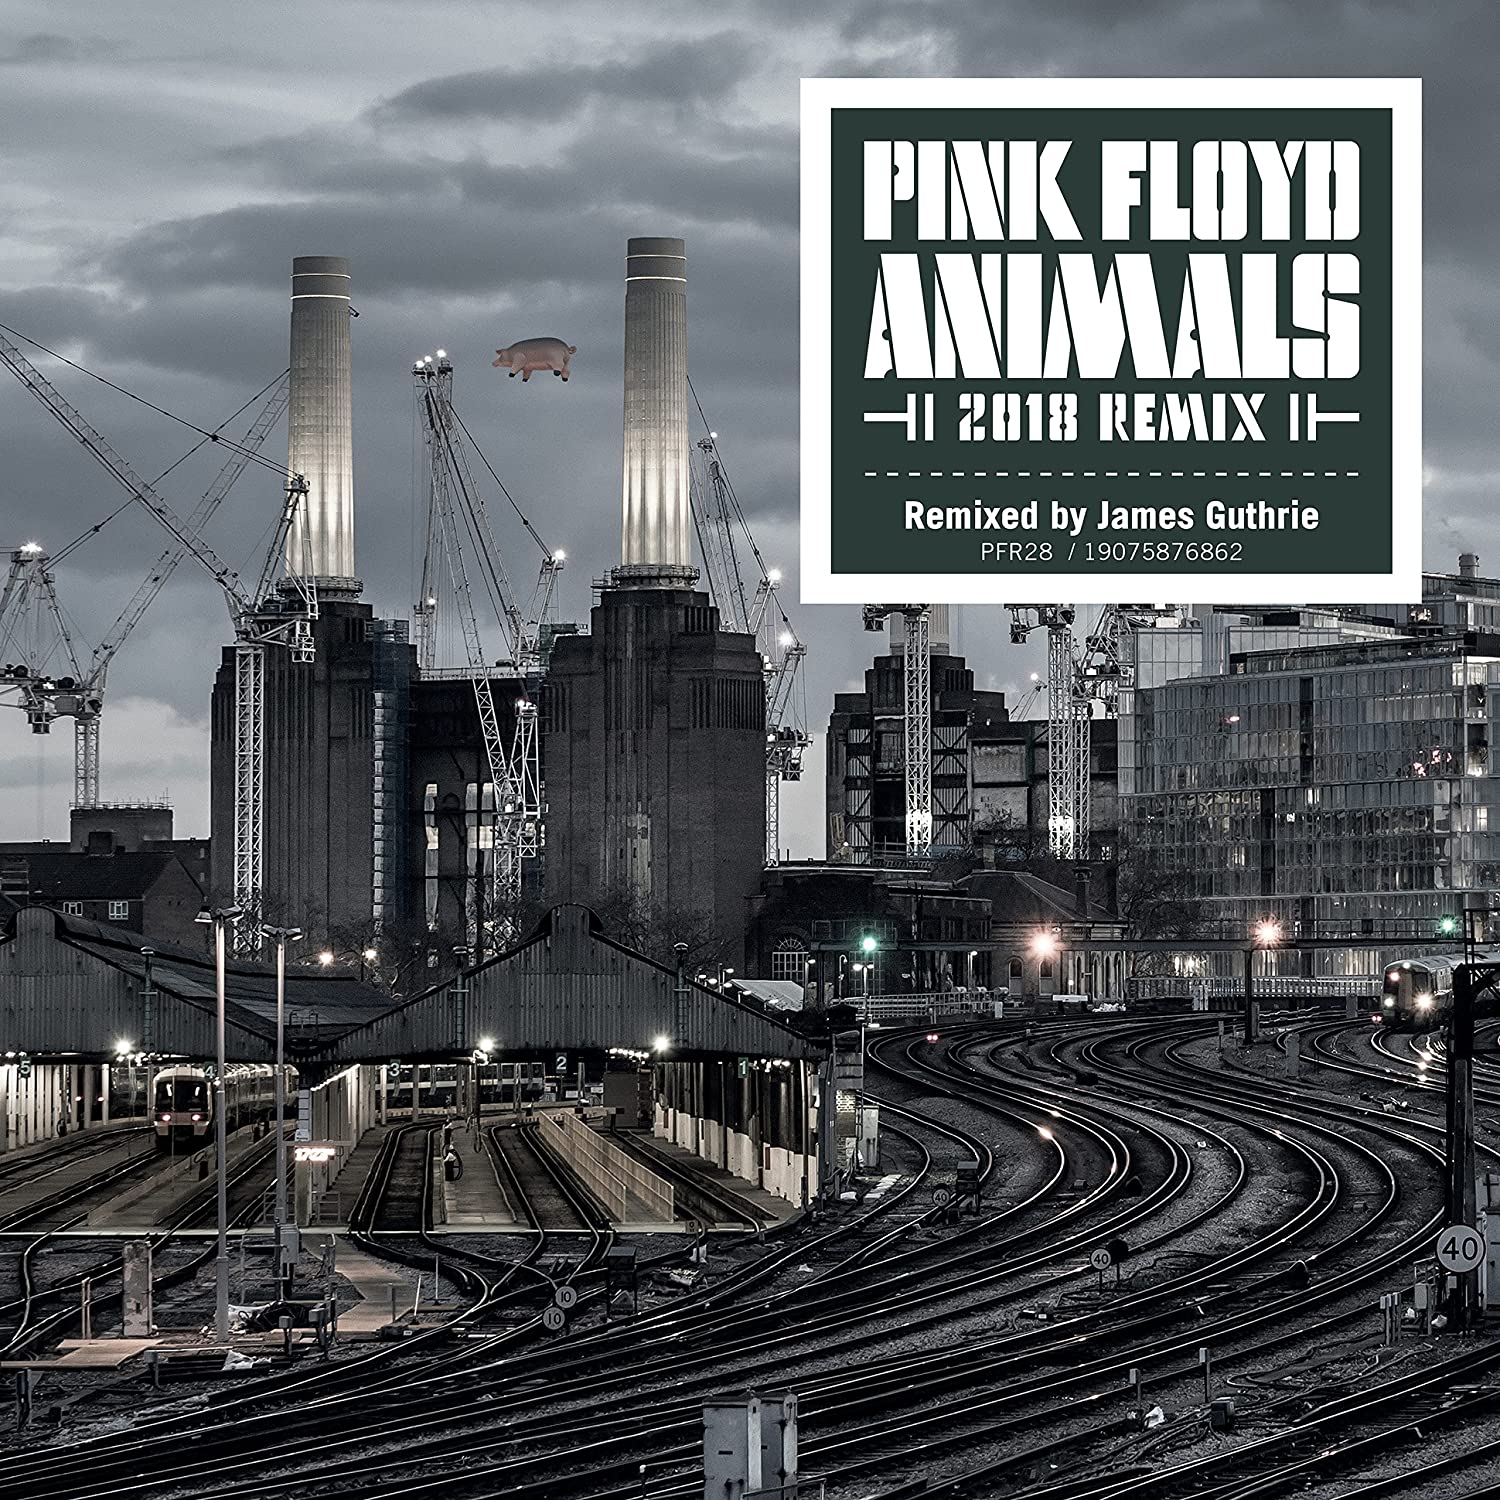 Pink Floyd - Animals 2018 Remix (Vinyl LP)